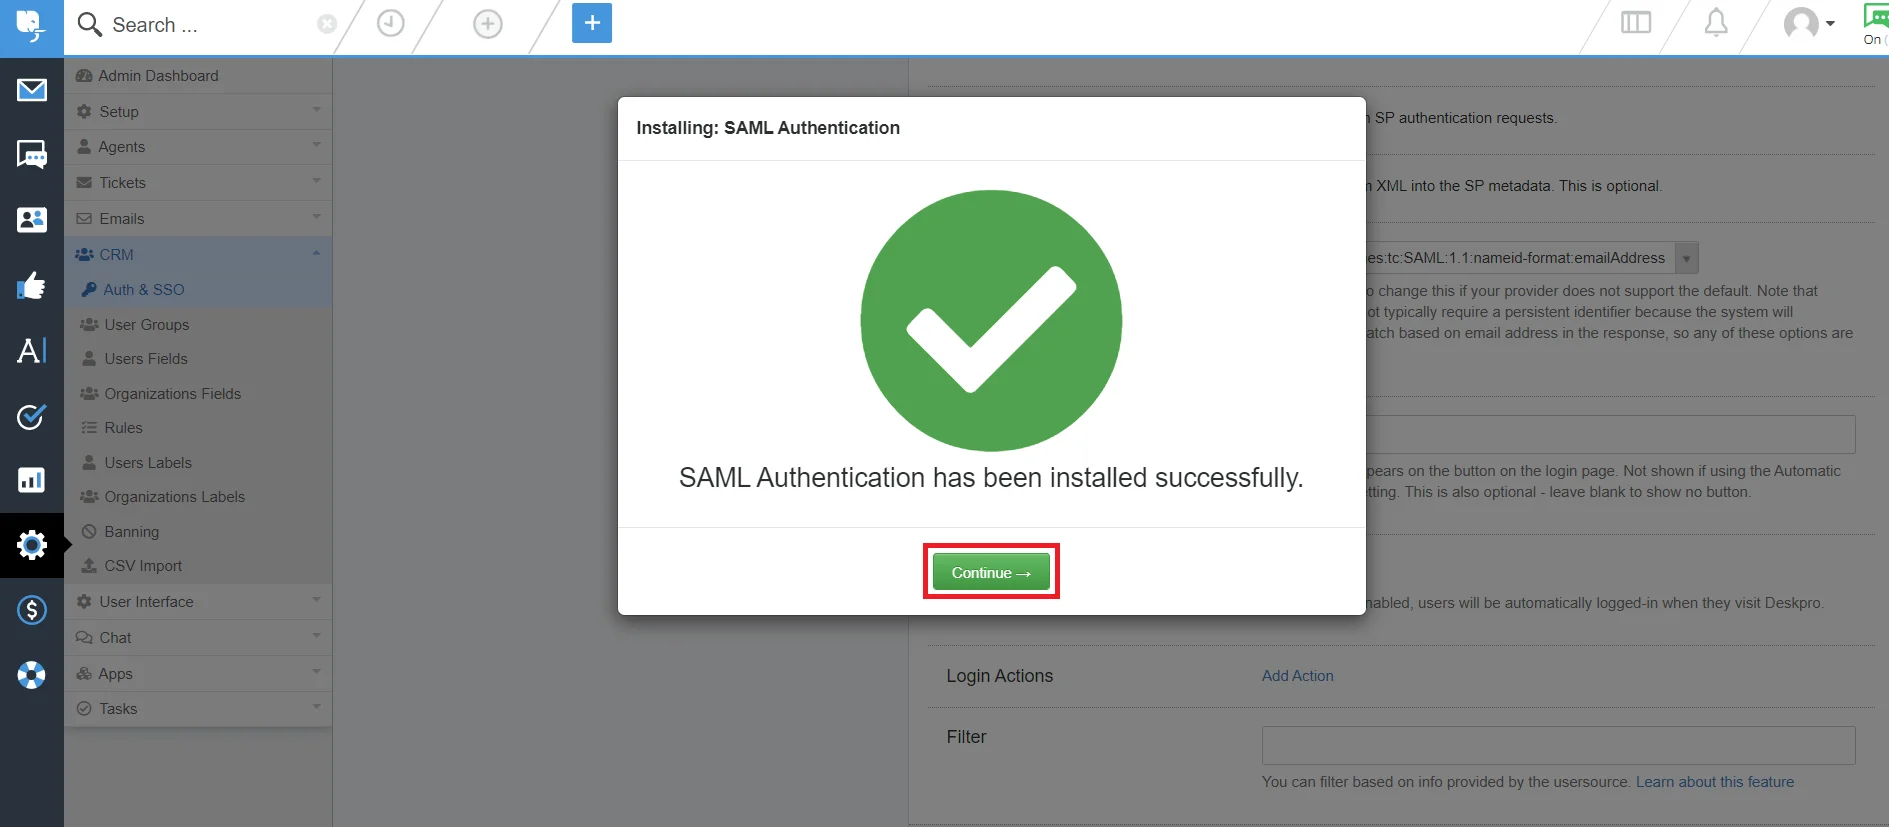 Deskpro SAML SSO integration using Joomla as Identity Provider